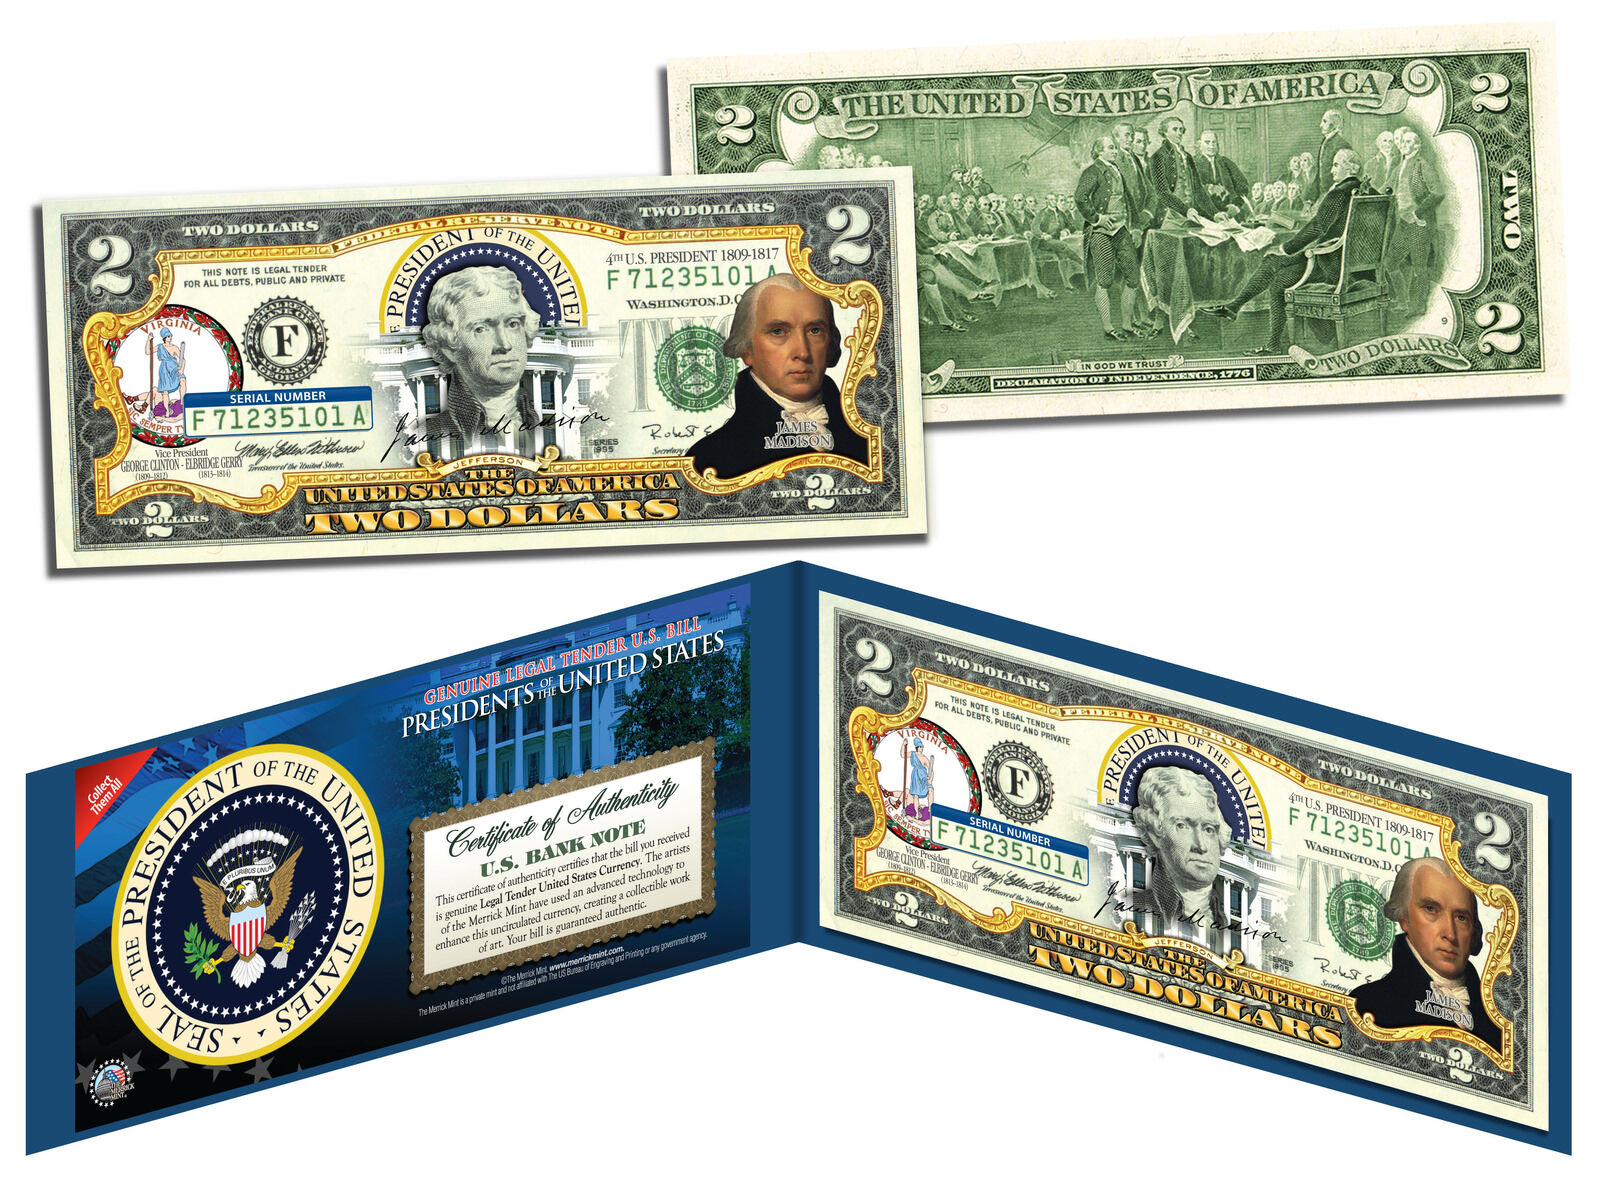 JAMES MADISON * 4th U.S. President * Colorized $2 Bill US Genuine Legal Tender